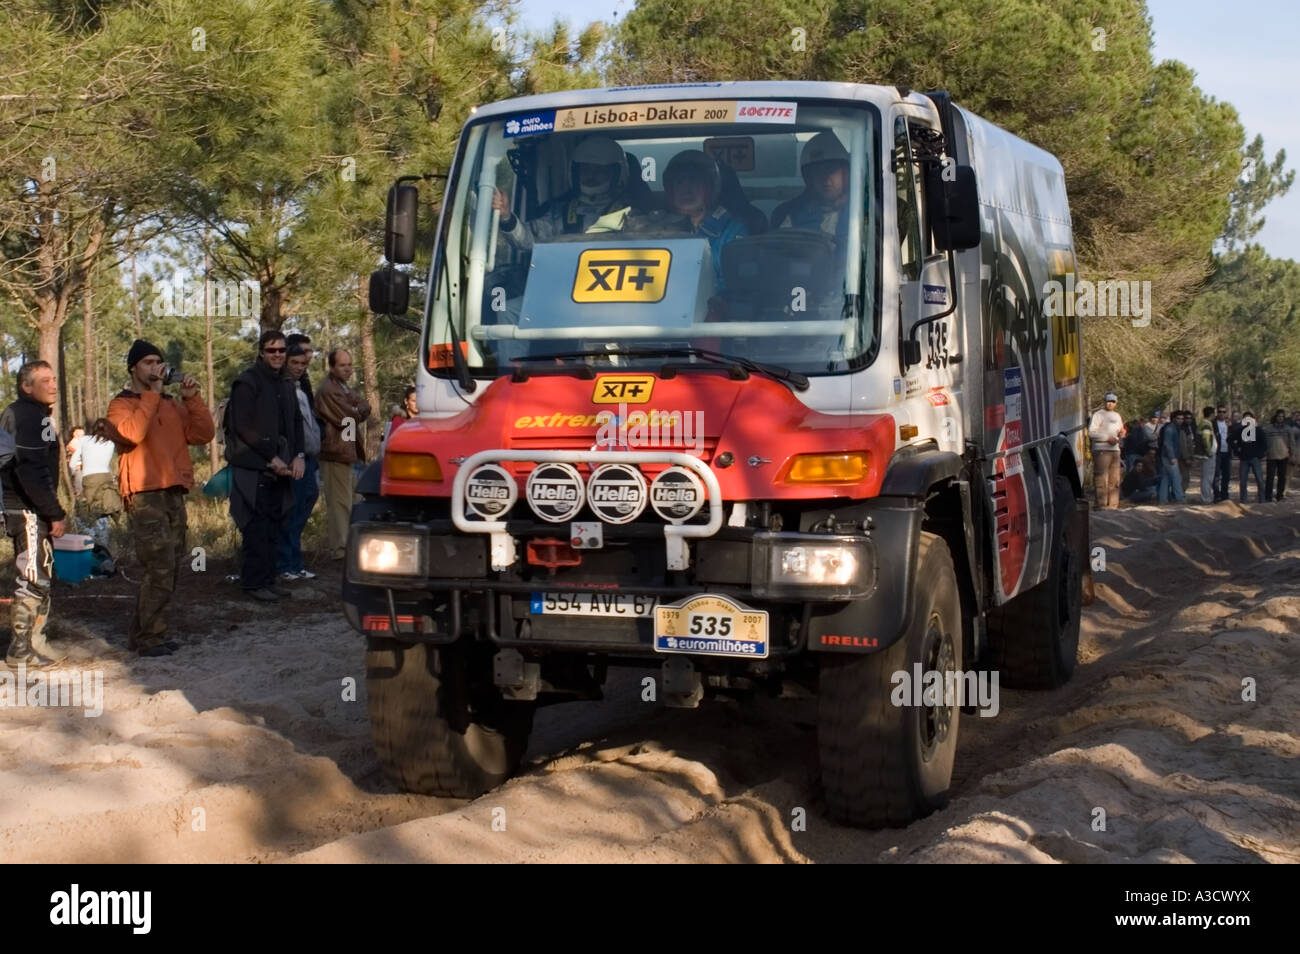 Erste Stufe Lisboa-Dakar 2007 Rallye - Truck 535 - Marco Piana, Marino Mutti, Anton Dorofeev Stockfoto